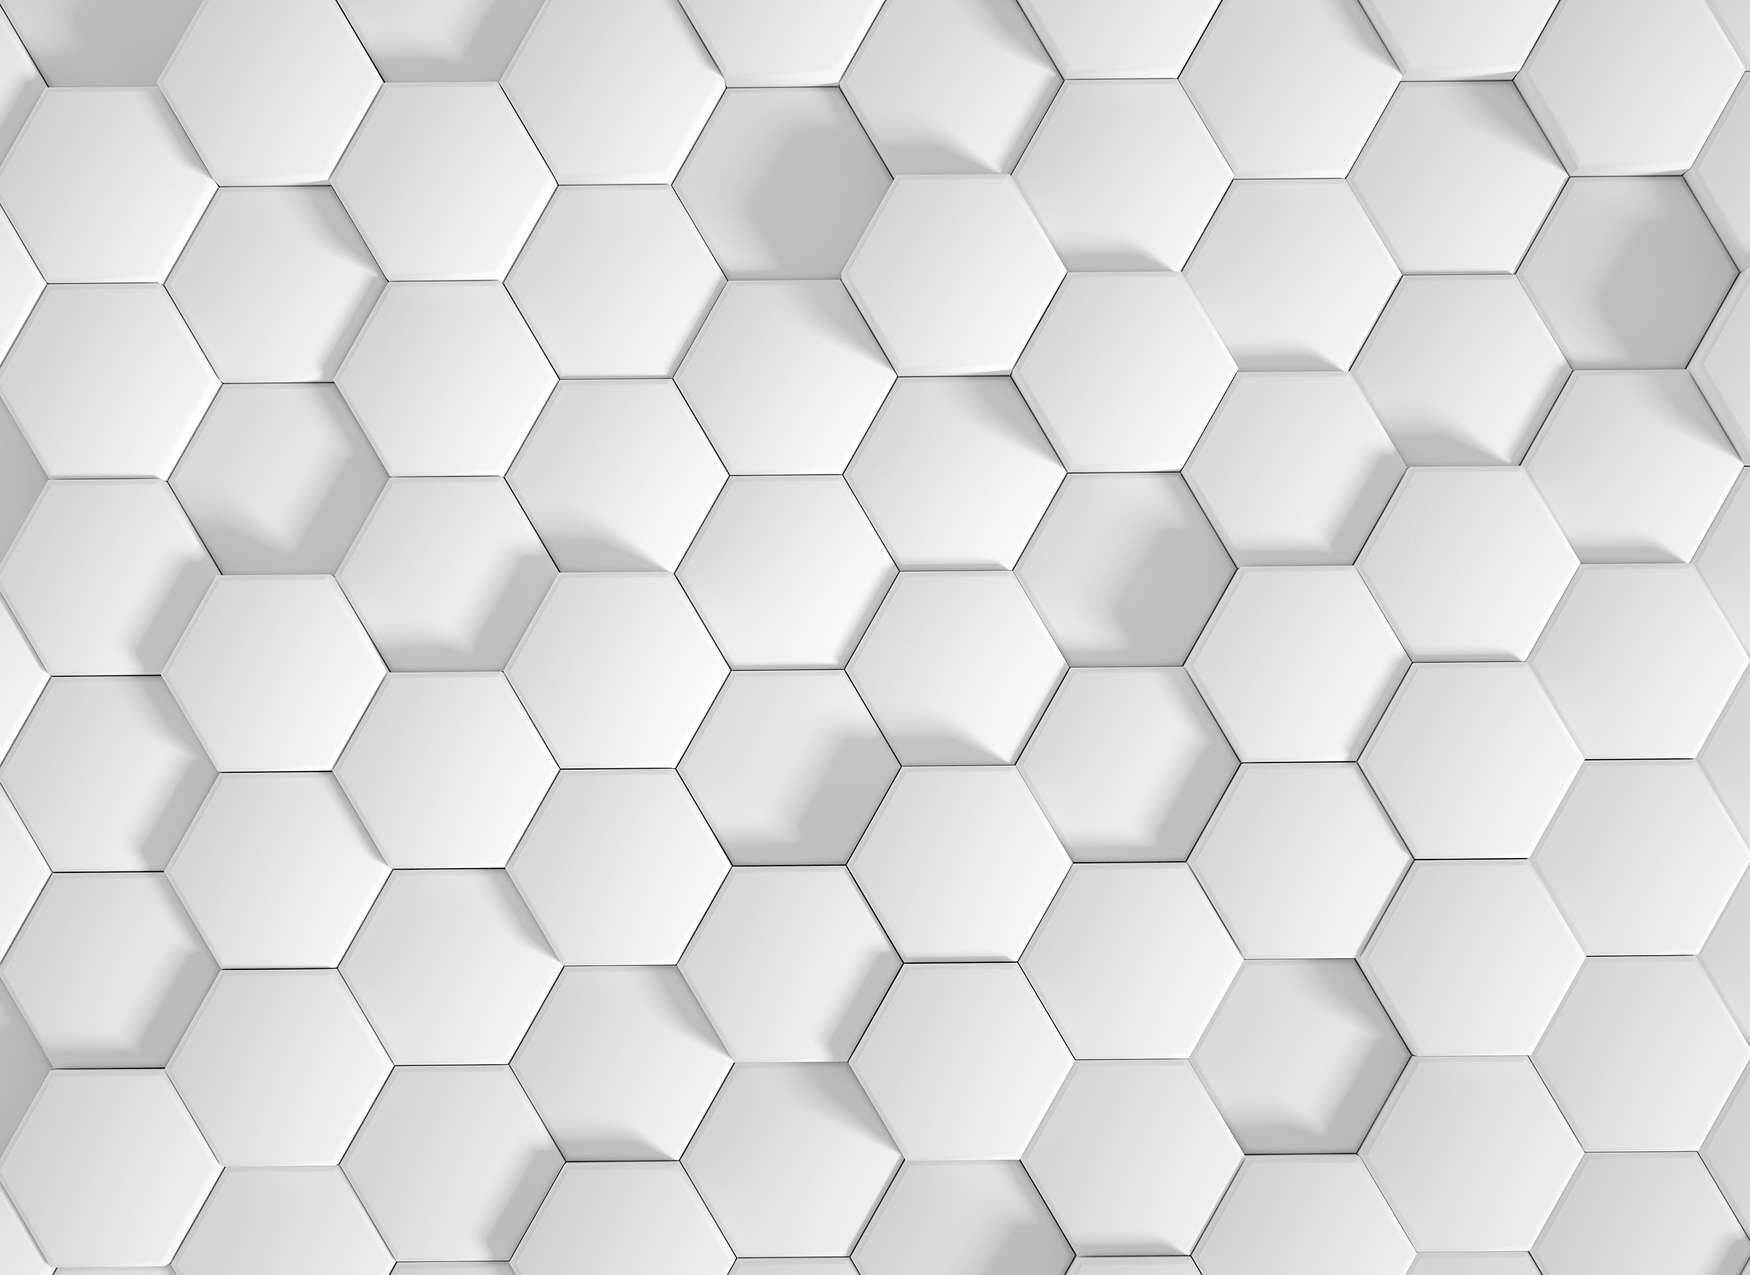             Honeycomb pattern with 3D optics photo wallpaper - grey
        